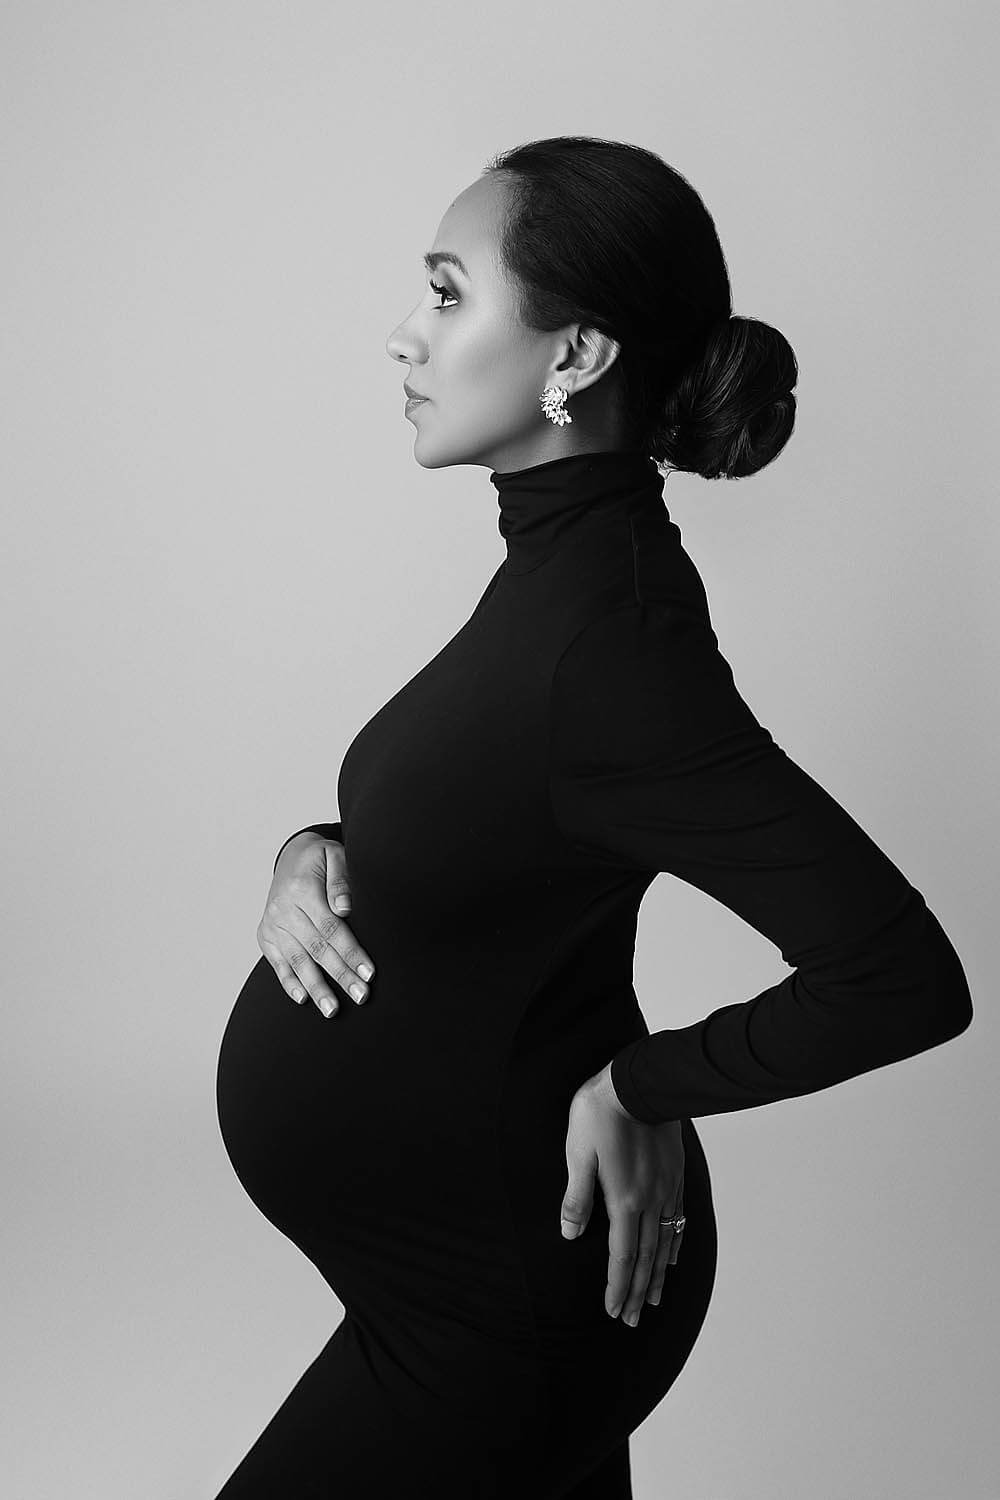 Pregnant mom silhouette black and white in pembroke pines, fl